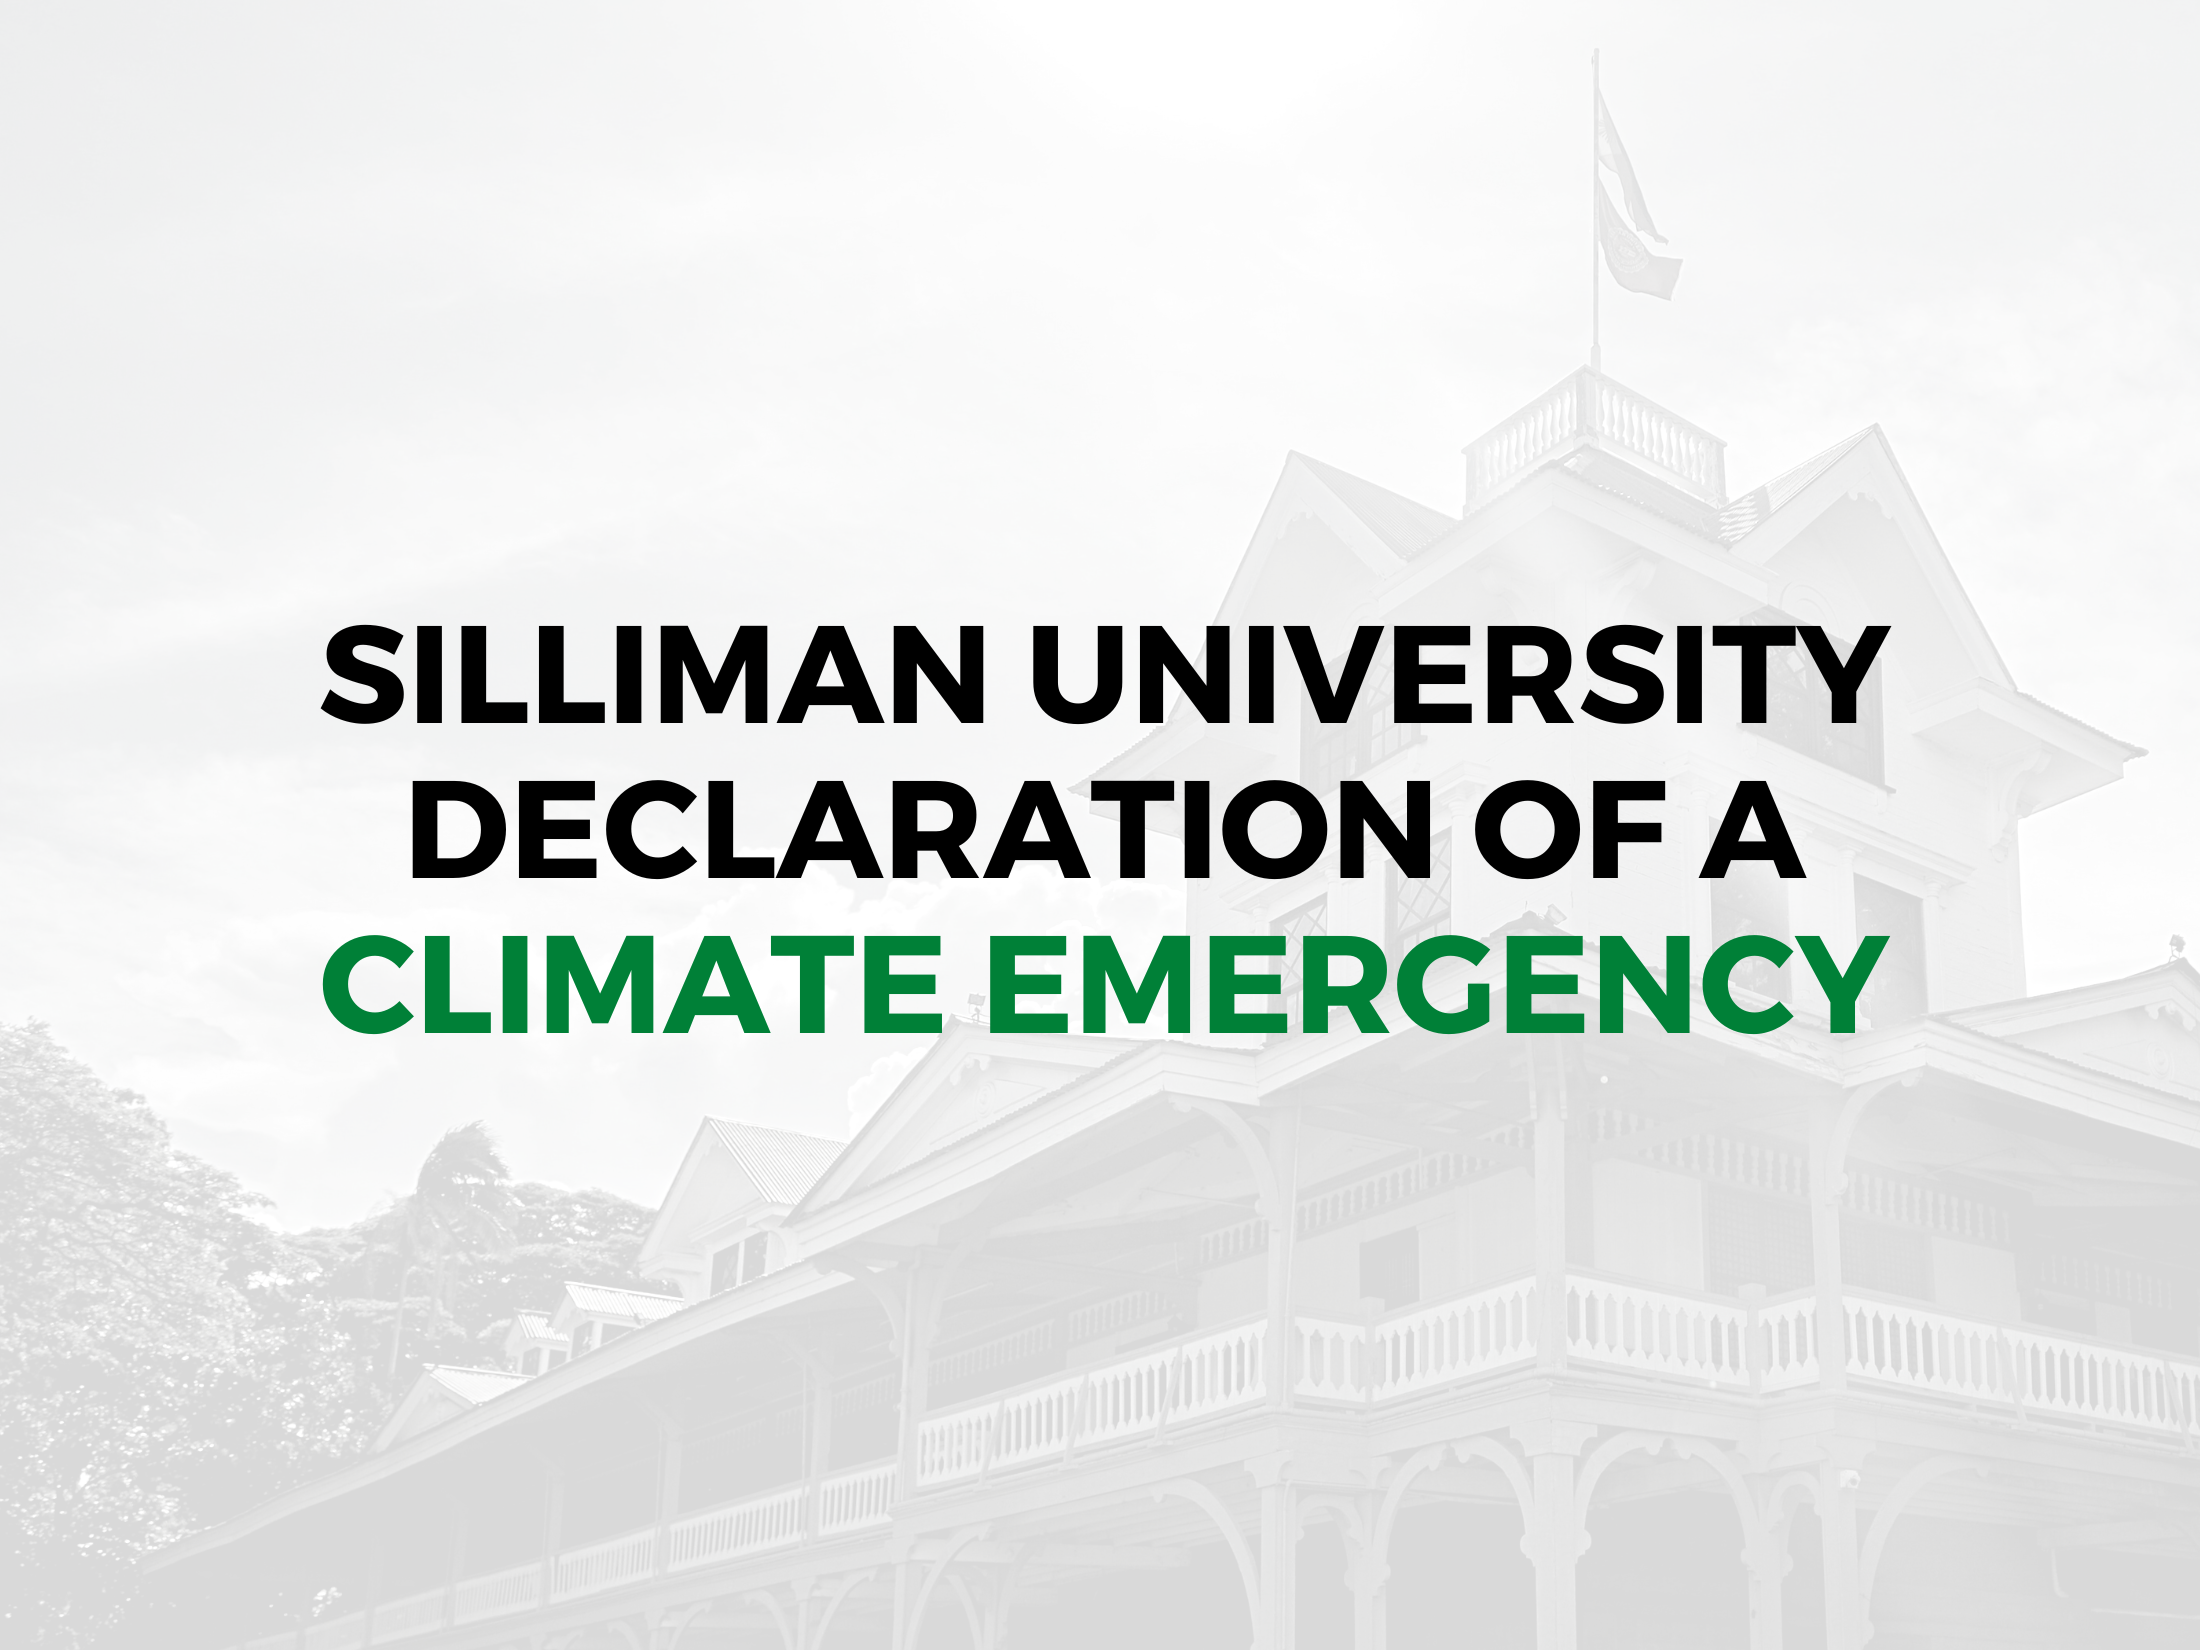 Silliman University Declaration of a Climate Emergency